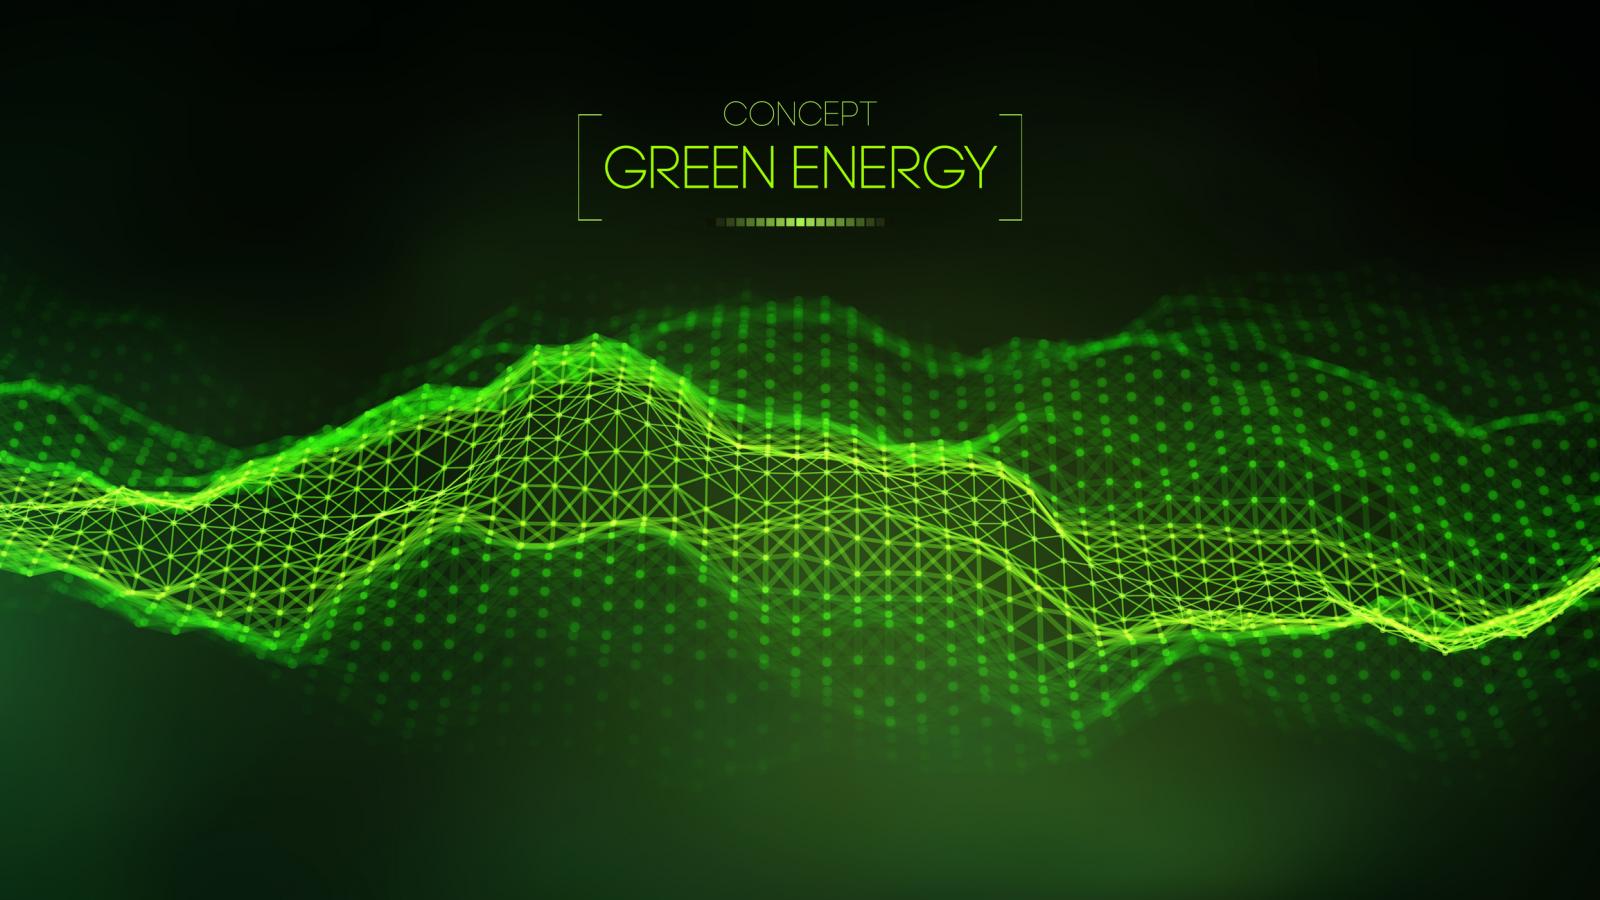 Gren energy is the future